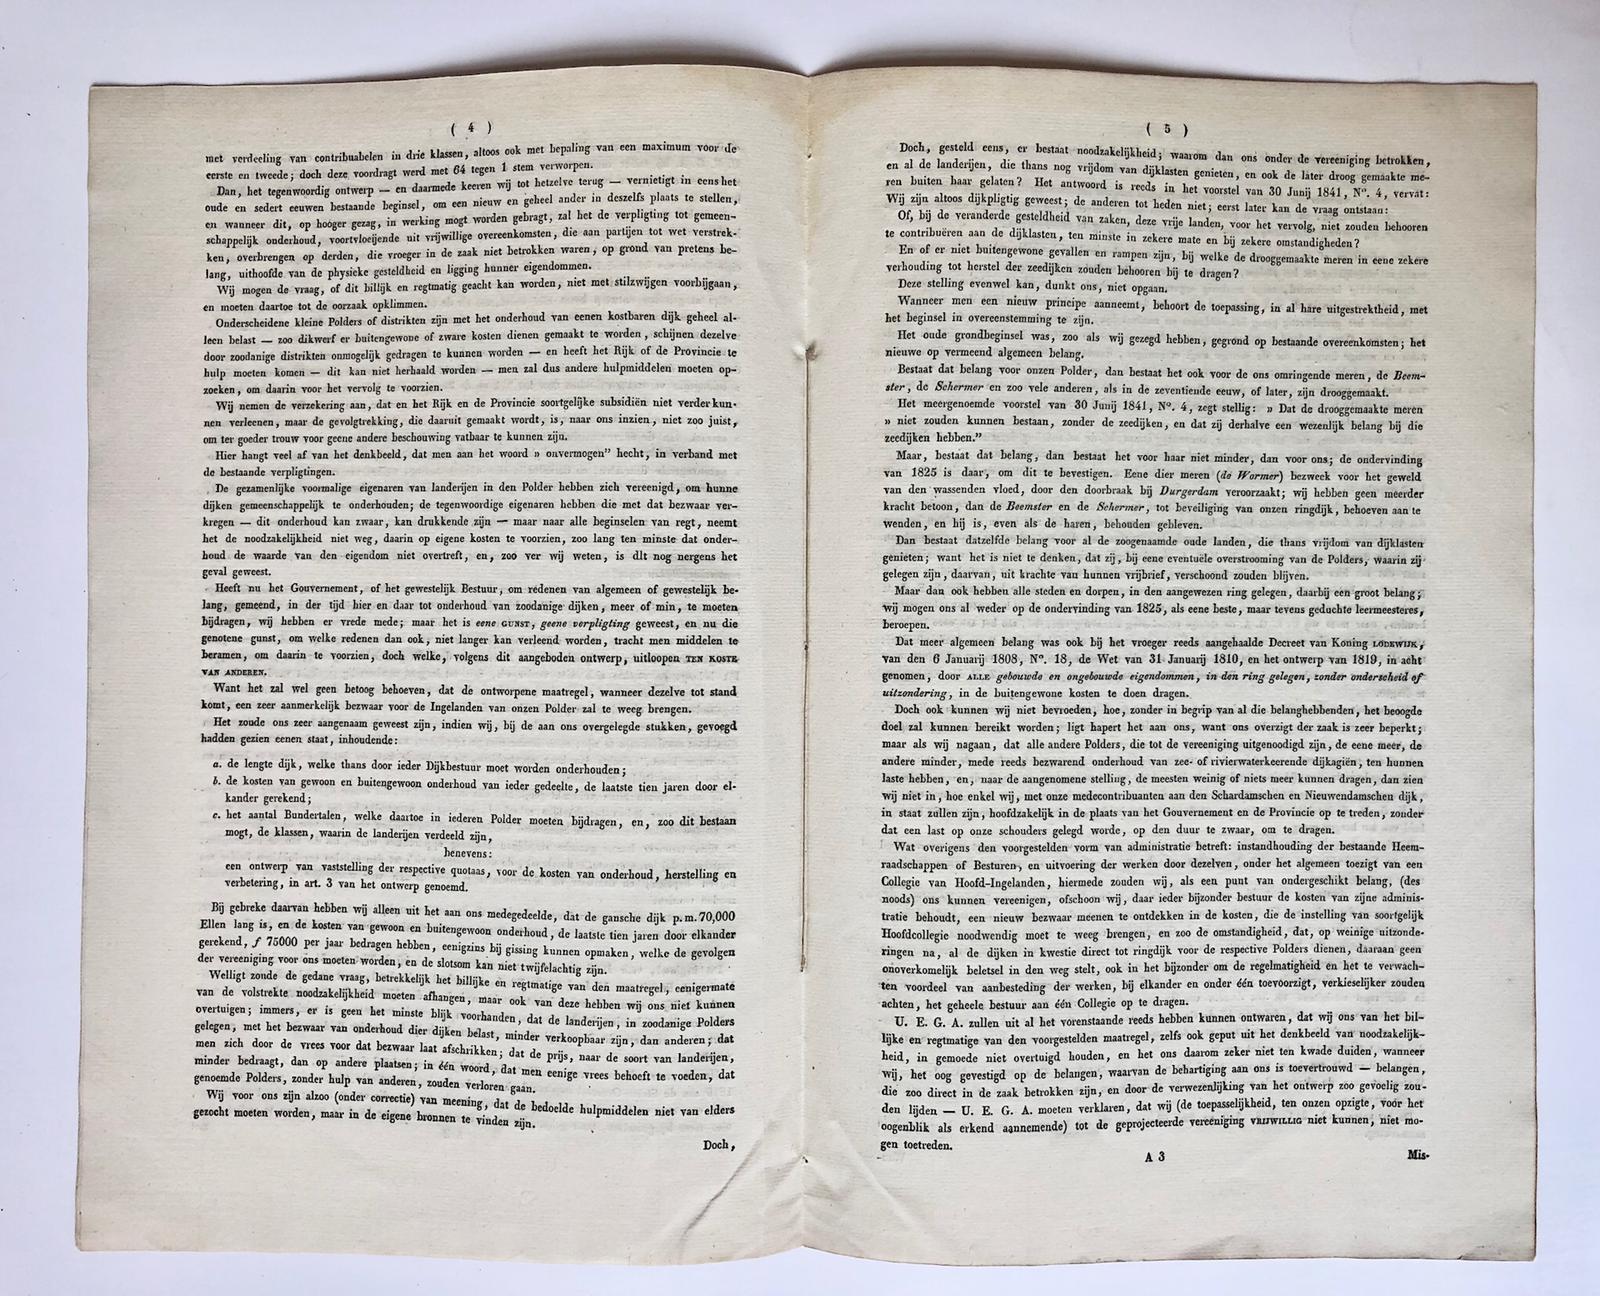 [Printed letter 1842] Gedrukte brief van de besturen van gemeente en polderbanne van De Rijp aan Gedeputeerde Staten van Noord-Holland, dd. Rijp 15-4-1842. Folio, 8 pag.